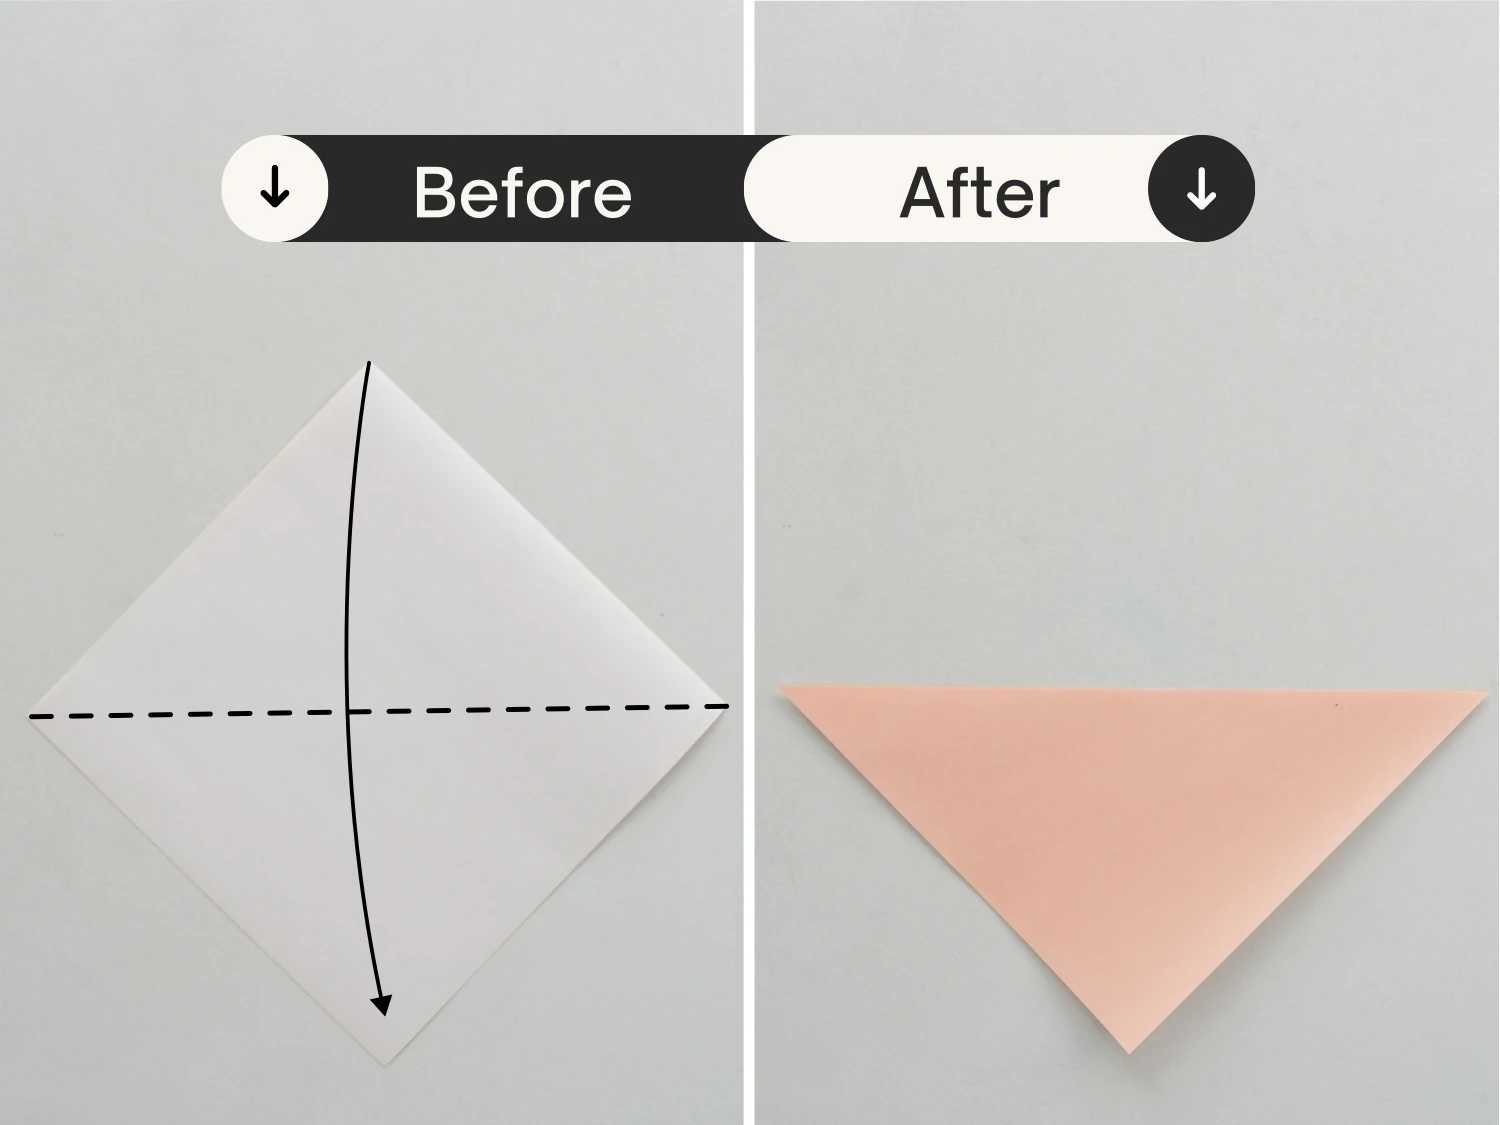 origami pig face | Origami Ok